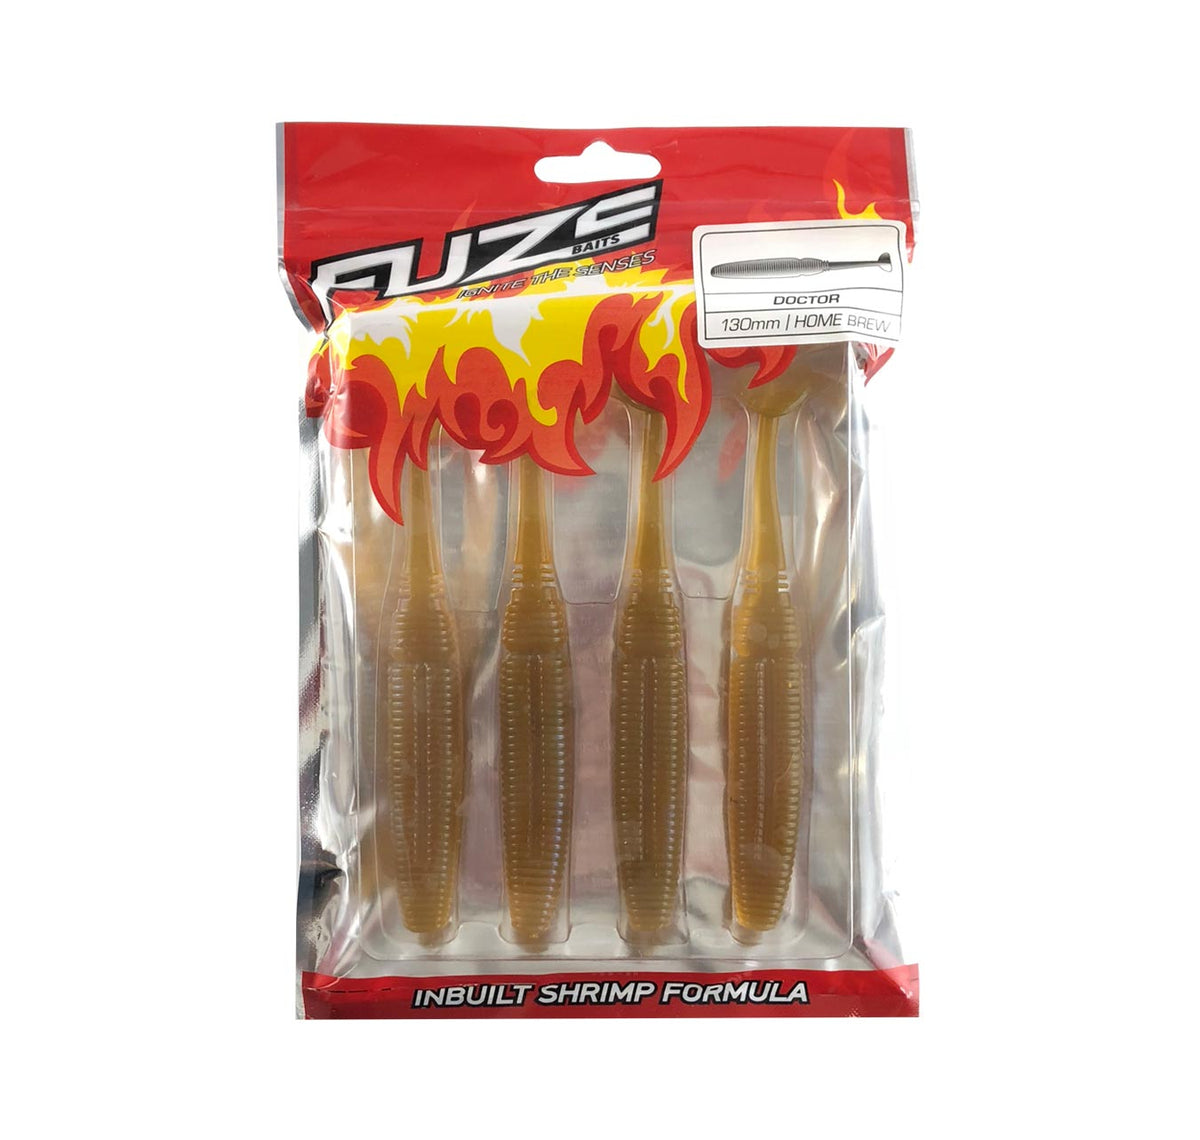 Fuze Snapper Soft Plastics Pack